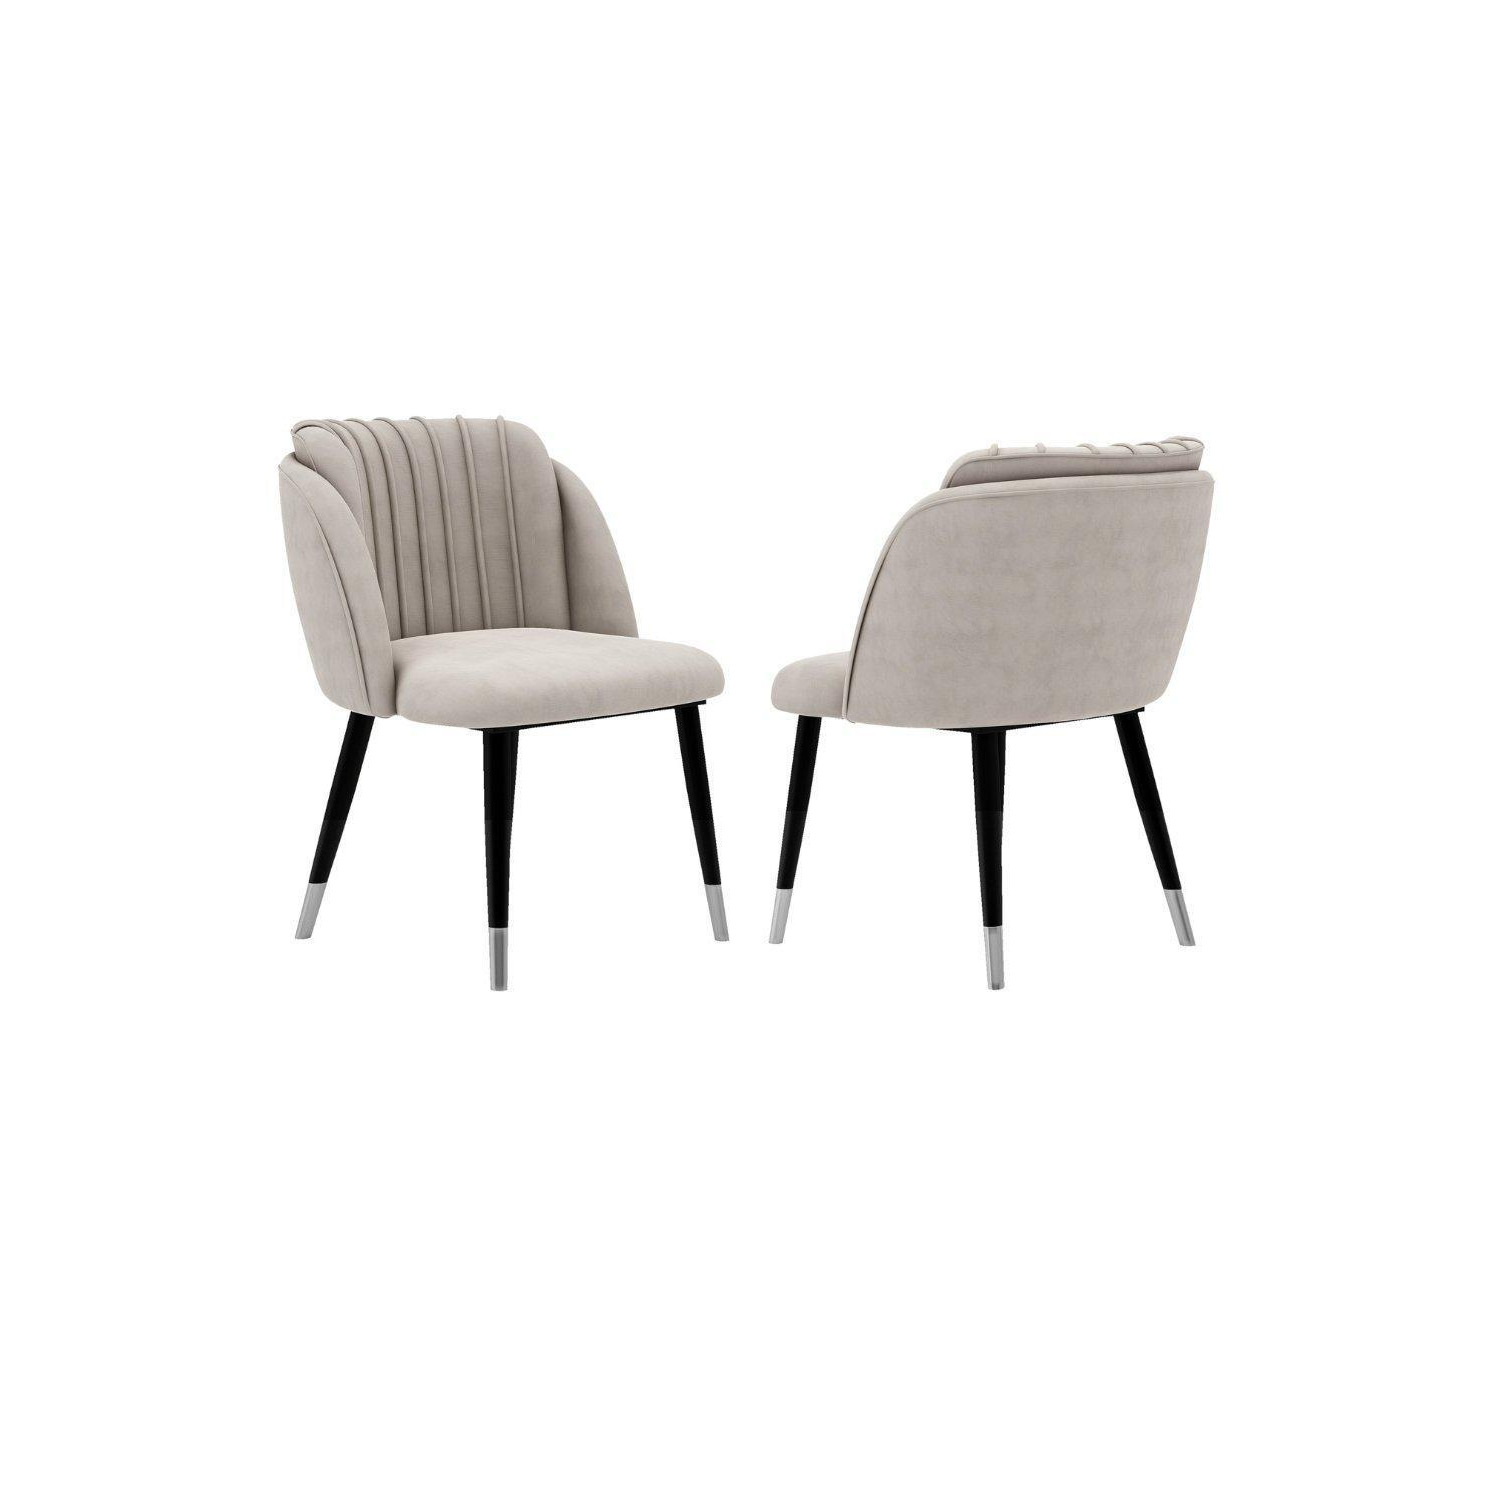 Set of 2 'Milano Velvet Dining Chair' Upholstered Dining Room Chair - image 1